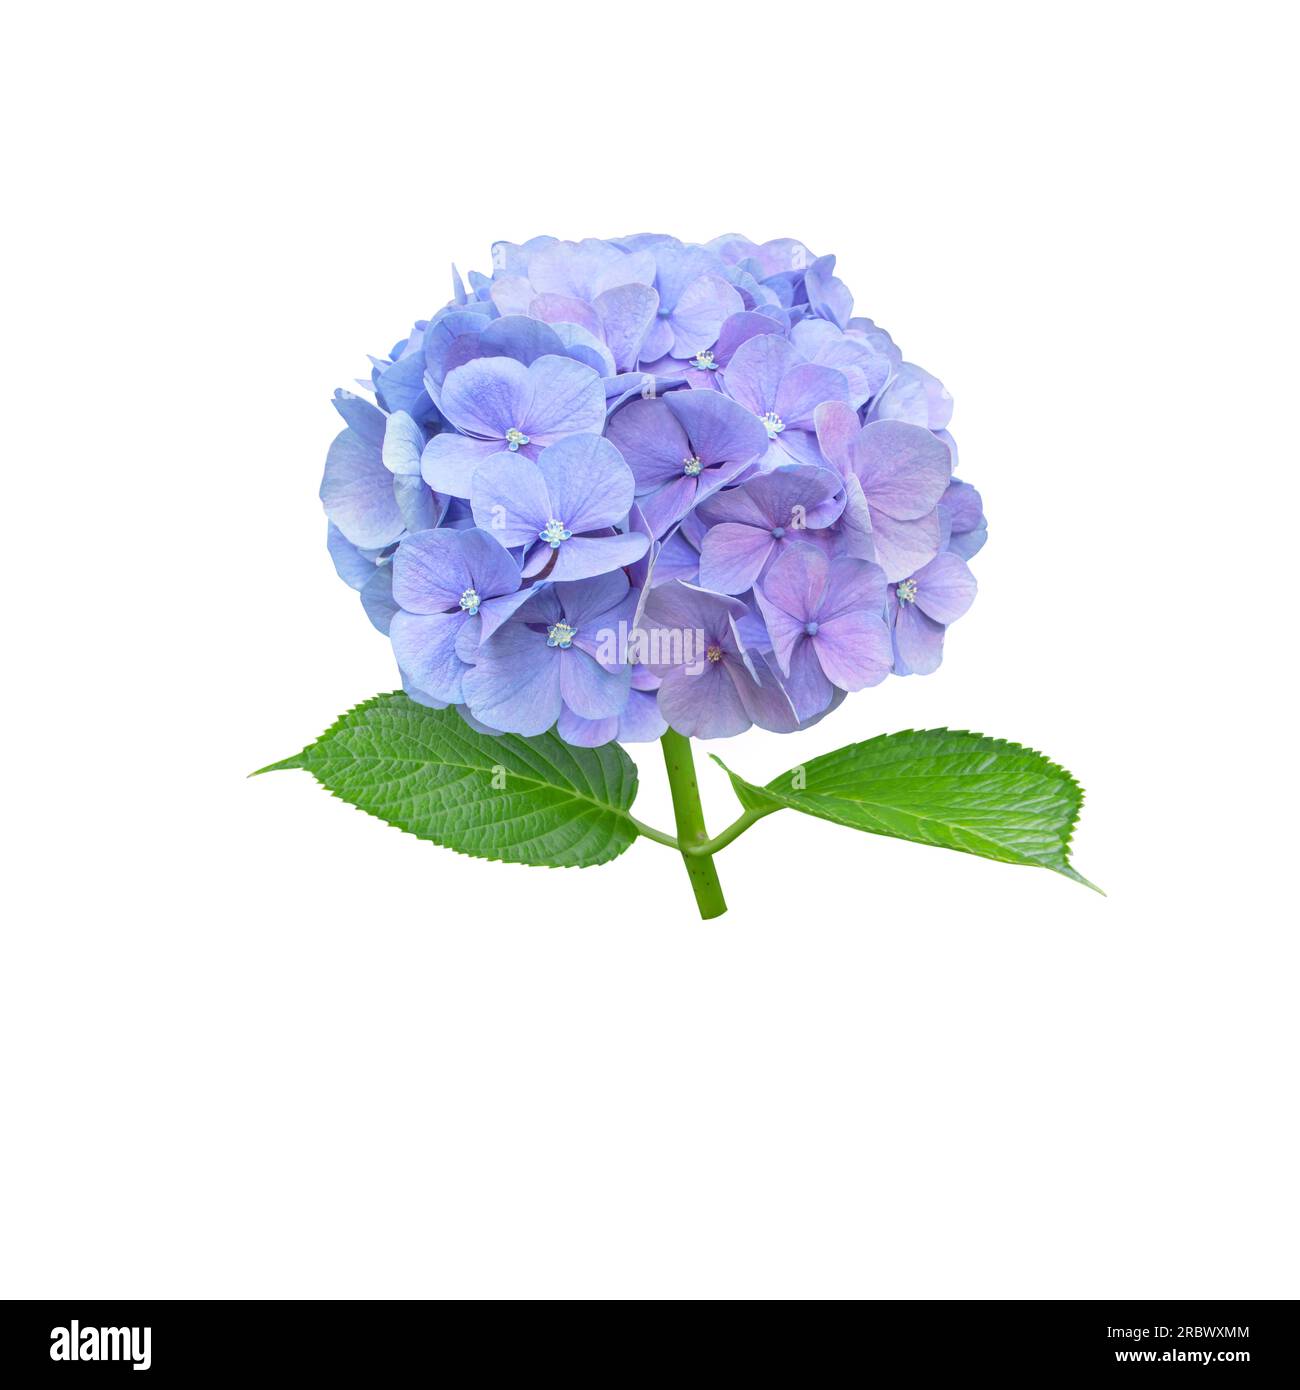 Celestial blue flower closeup isolated on white. Hortensia flowering plant. Stock Photo